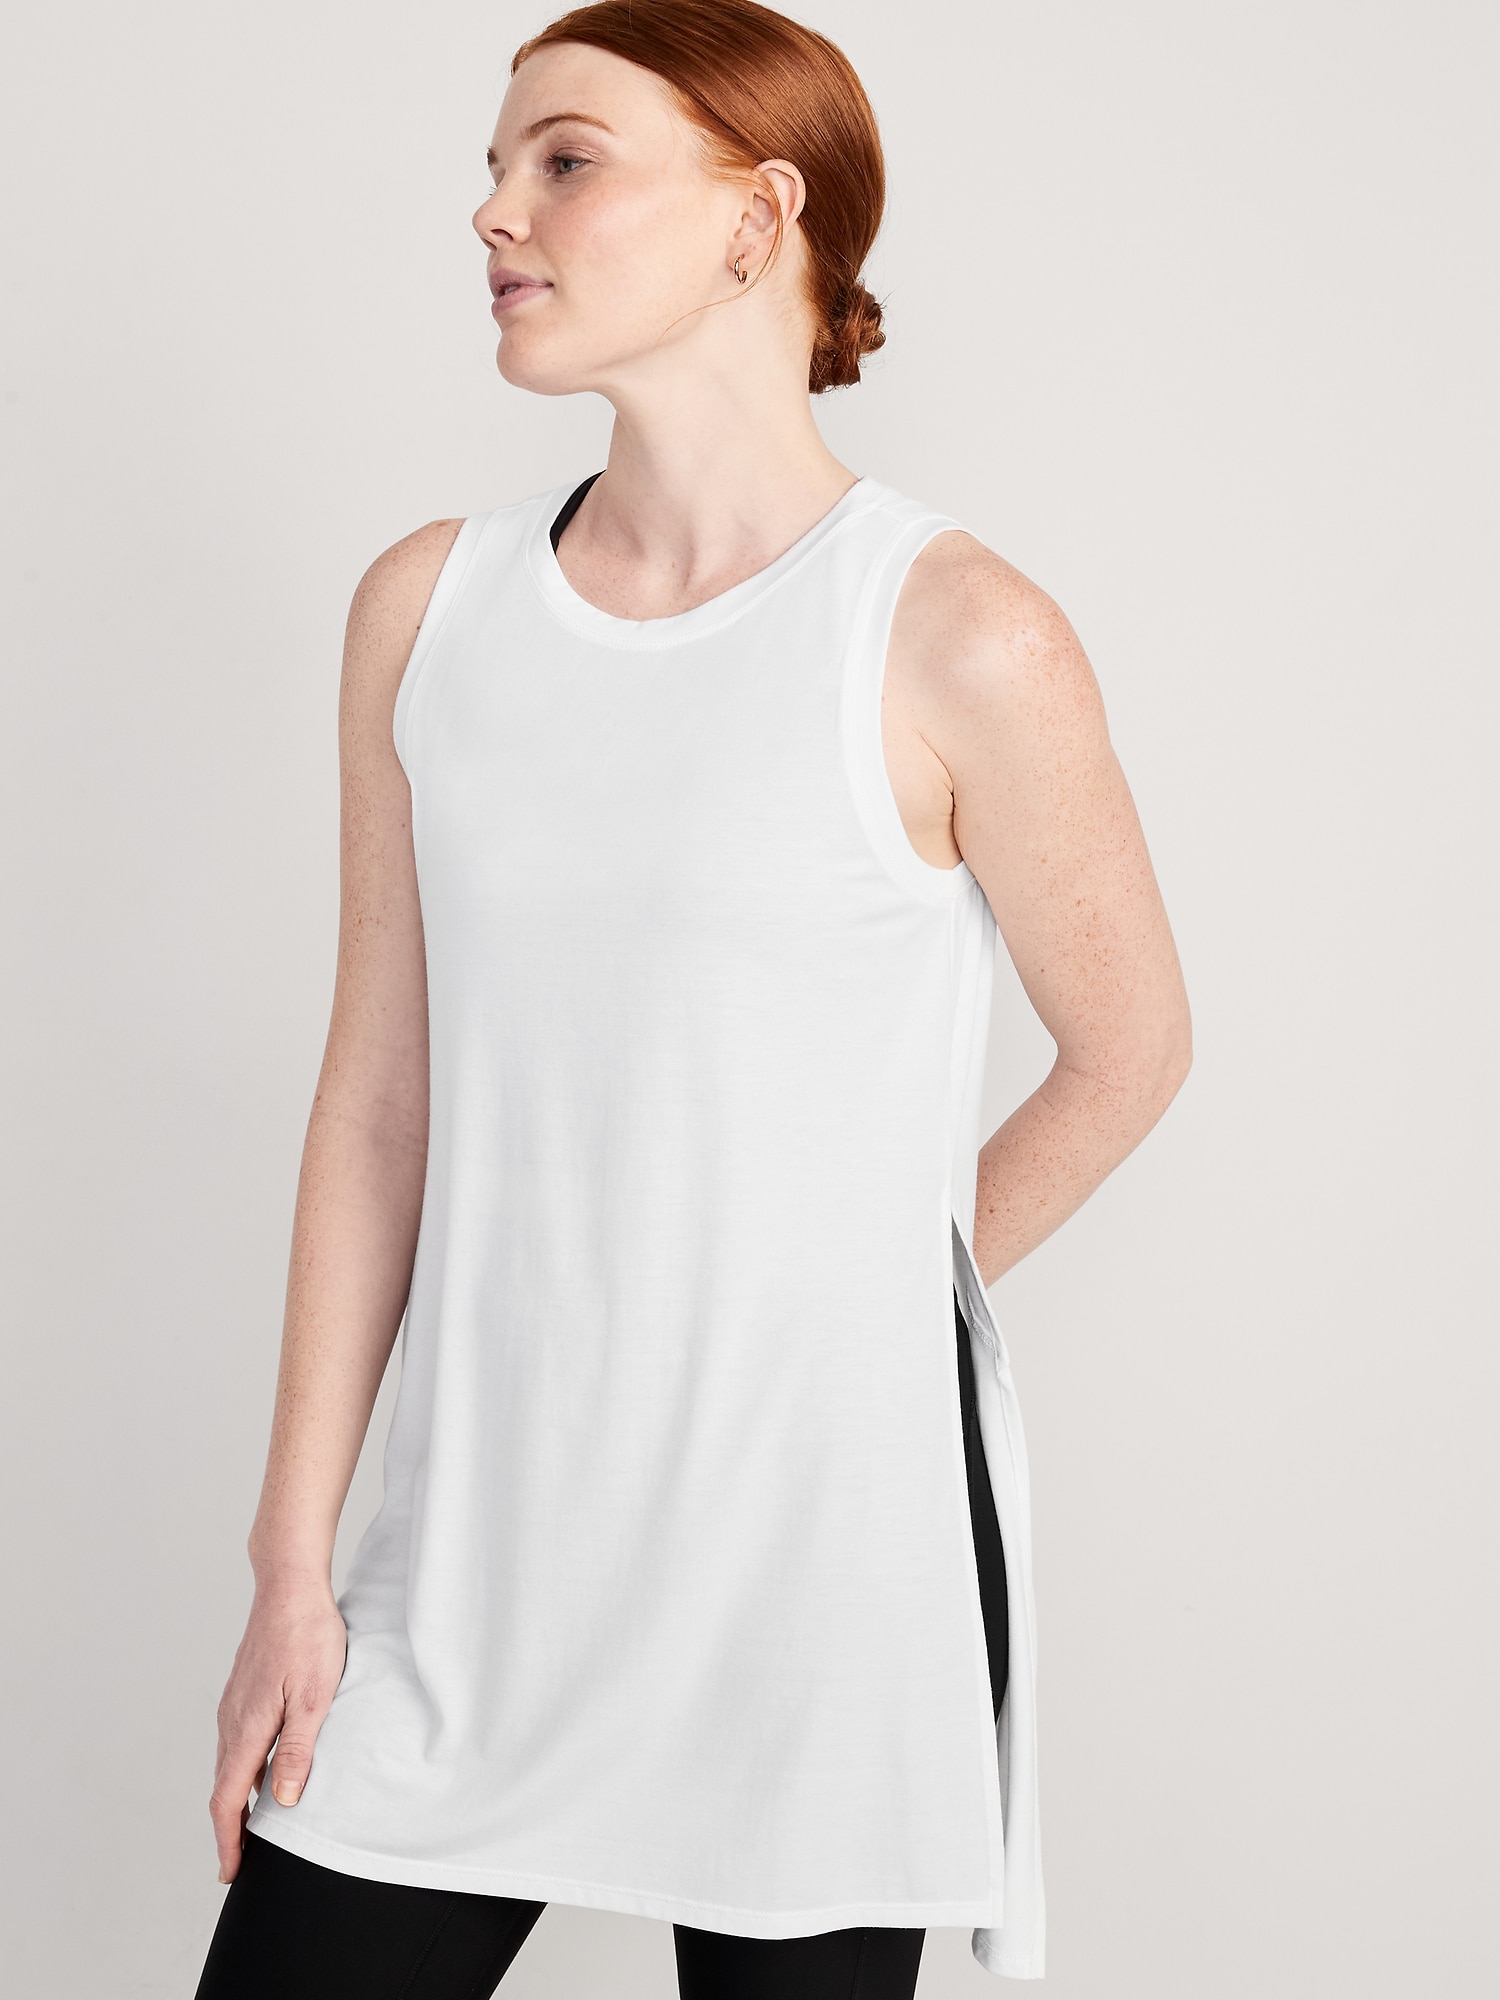 Old Navy UltraLite All-Day Sleeveless Tunic for Women white. 1